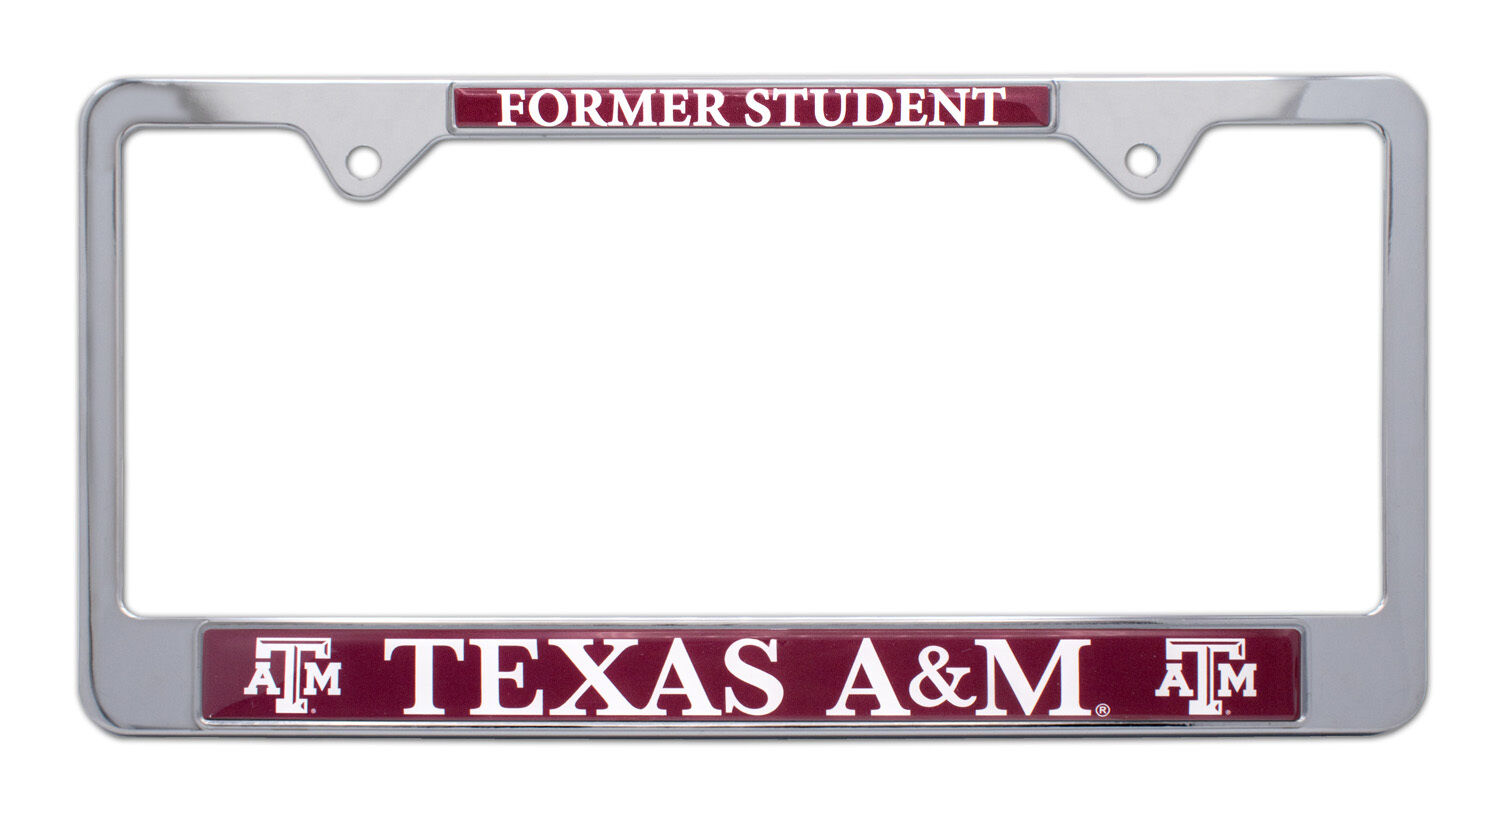 texas a&m former student alumni logo college chrome license plate frame usa made